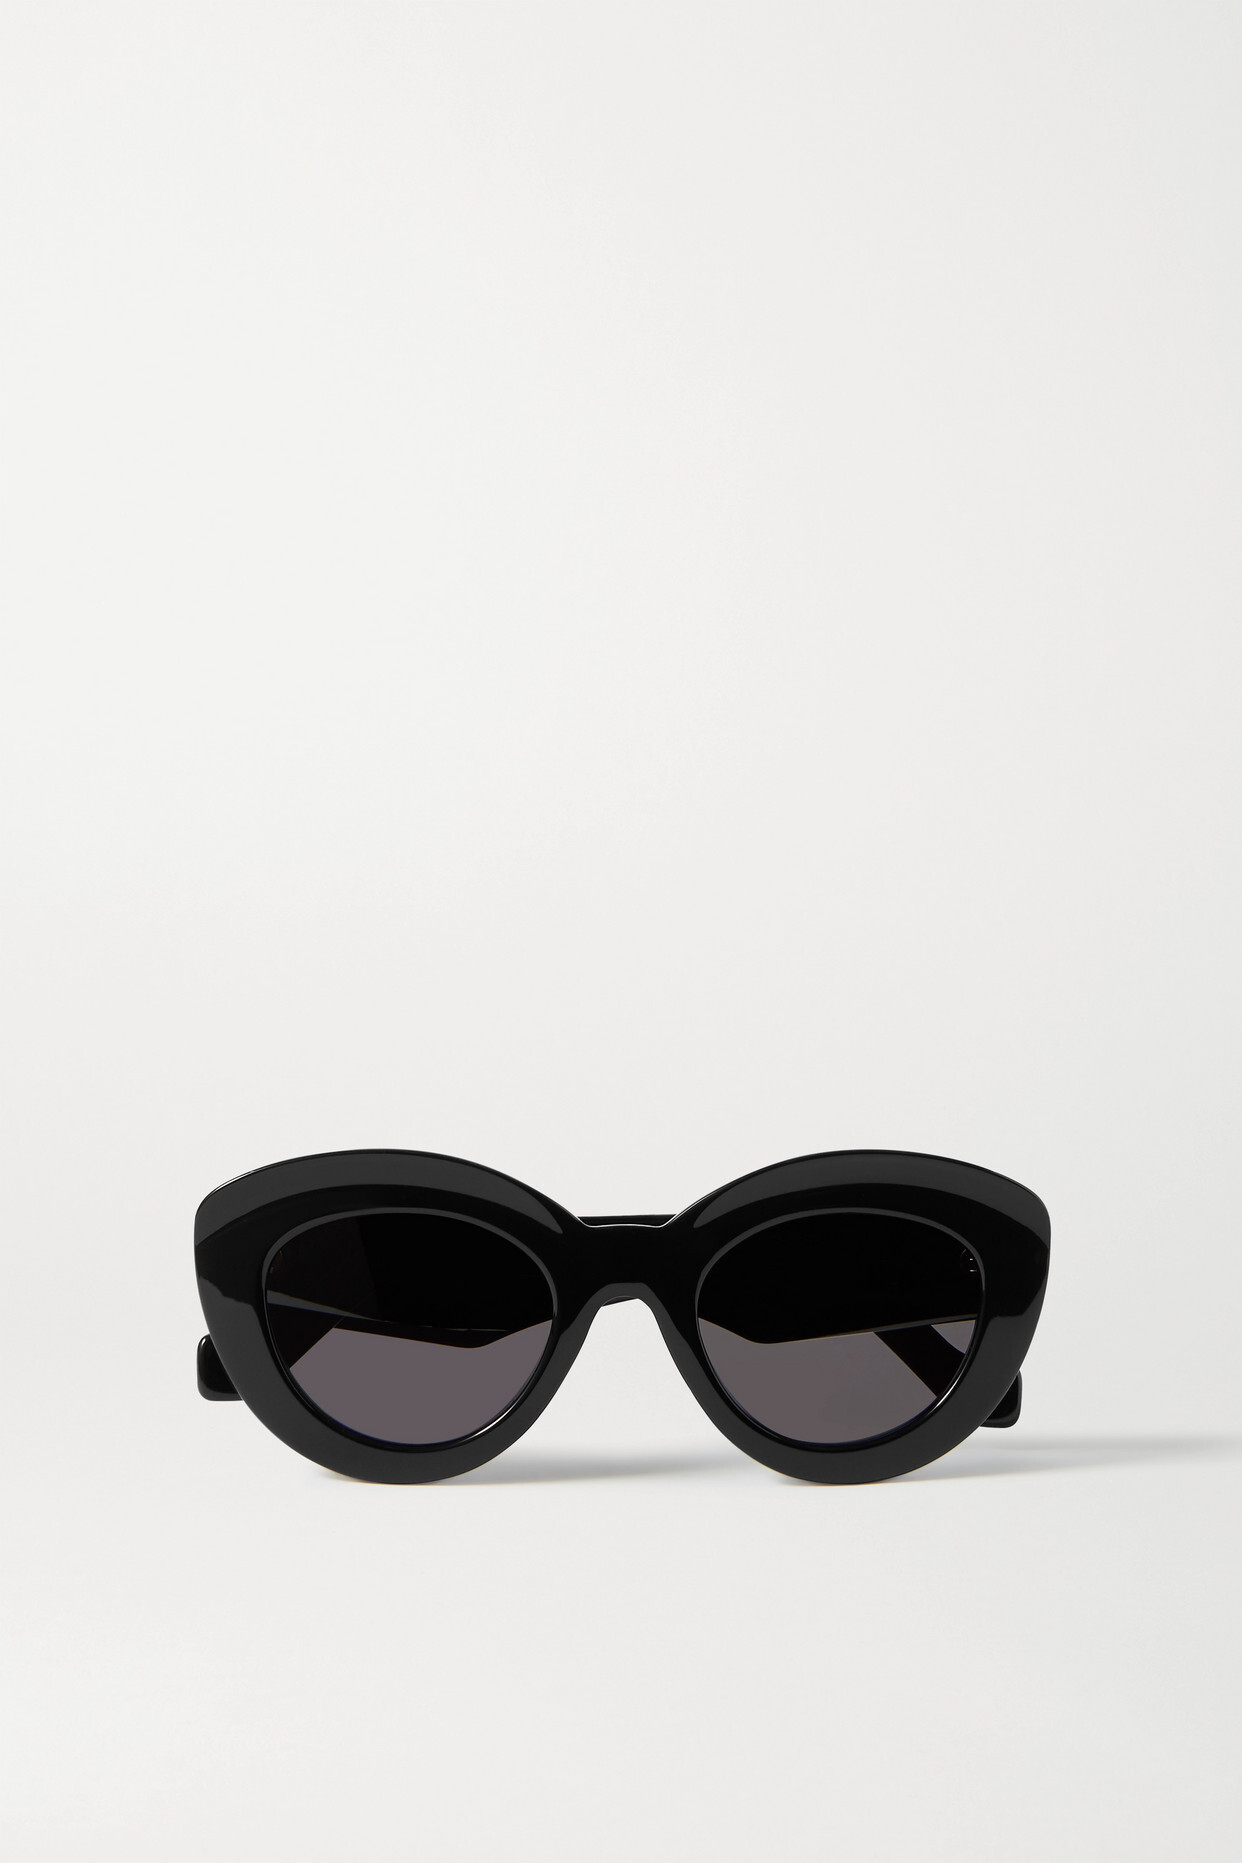 Loewe - Cat-eye Acetate Sunglasses - Black